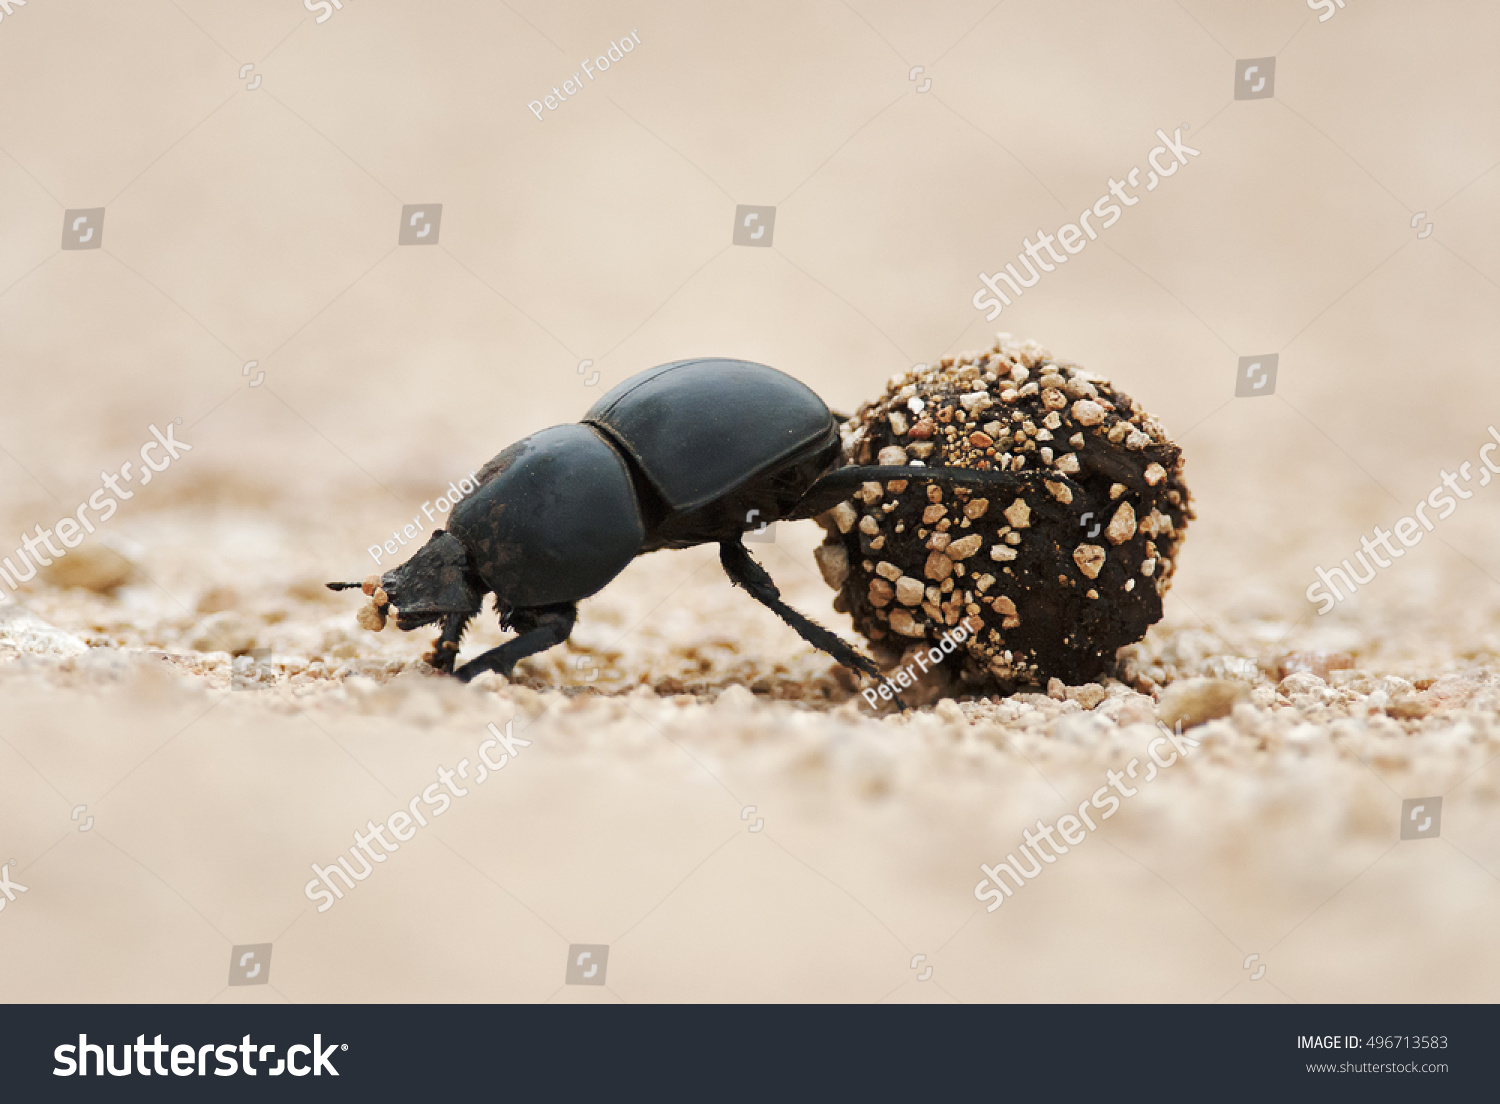 Flightless Dung Beetle, Circellium bacchus, roll dung ball, Addo Elephant National Park, South Africa #496713583